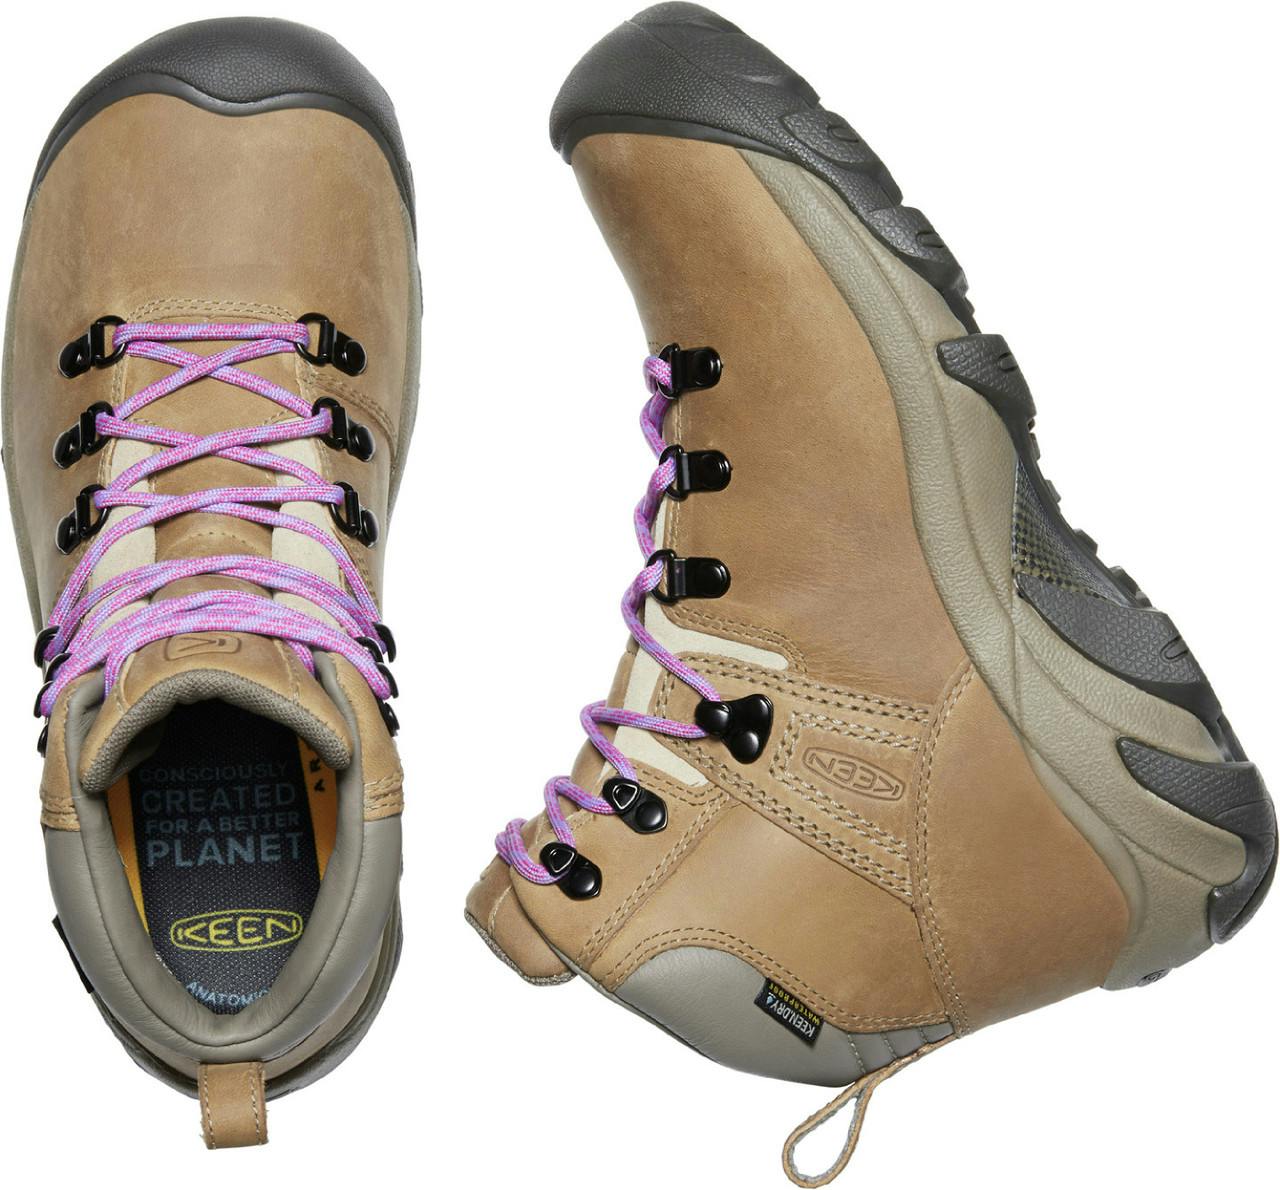 Pyrenees Hiking Boots Safari/English Lavendar